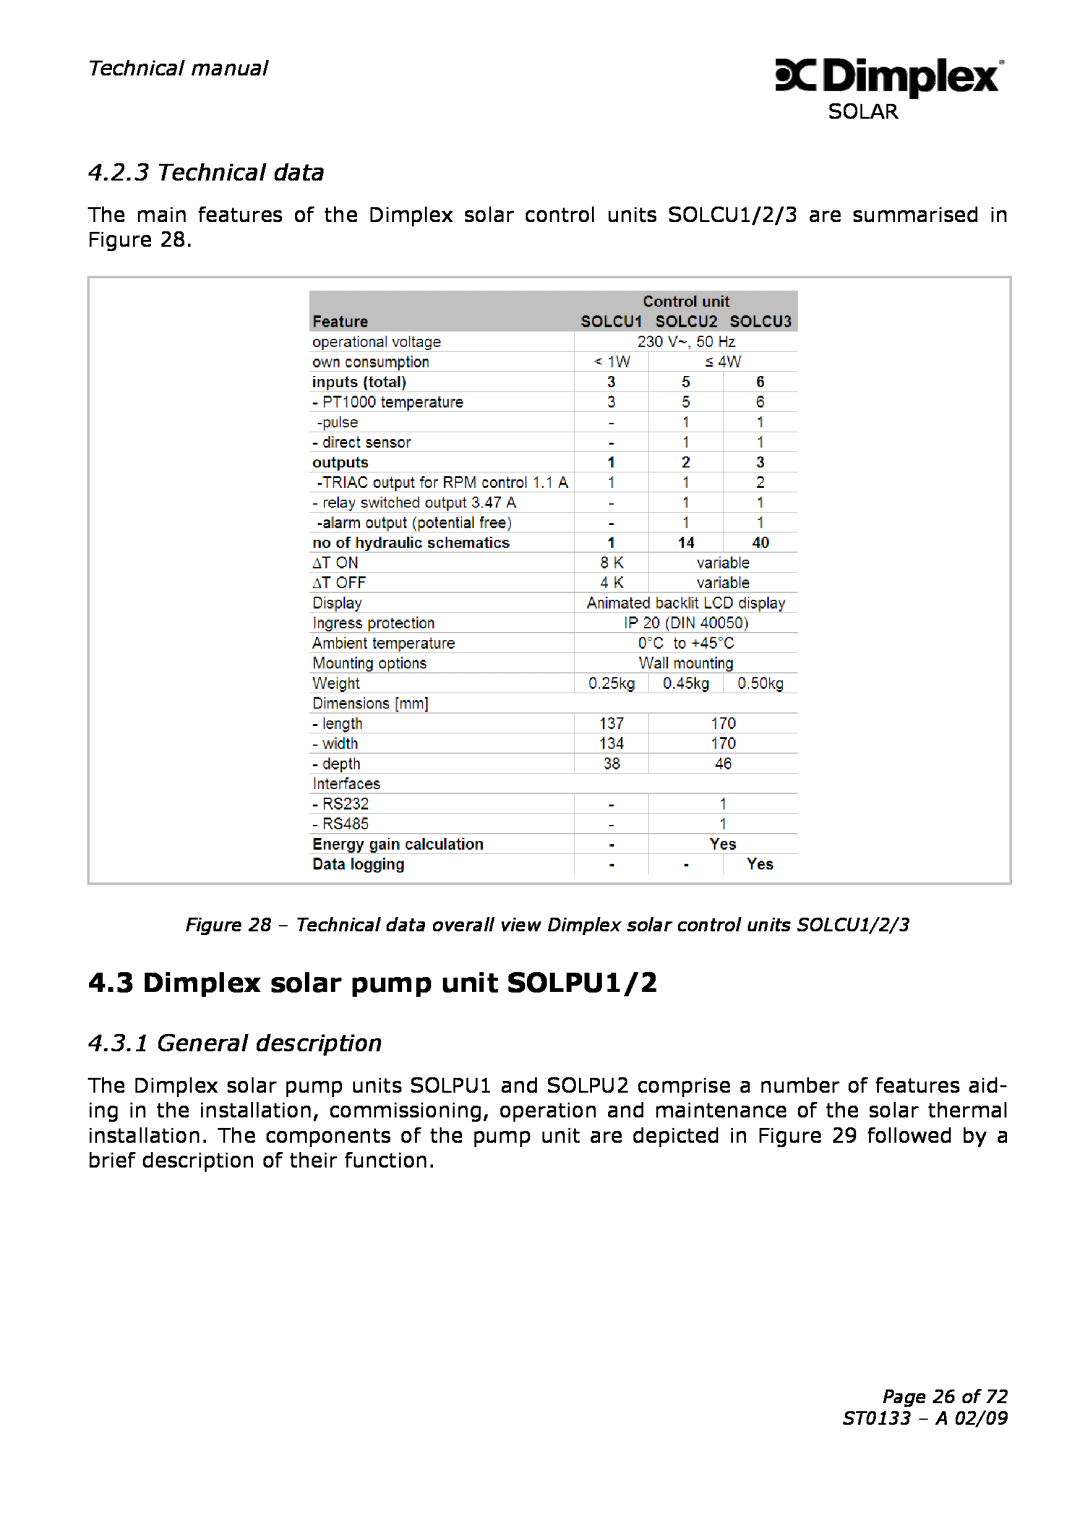 Dimplex ST0133 technical manual Dimplex solar pump unit SOLPU1/2, Technical data, General description 